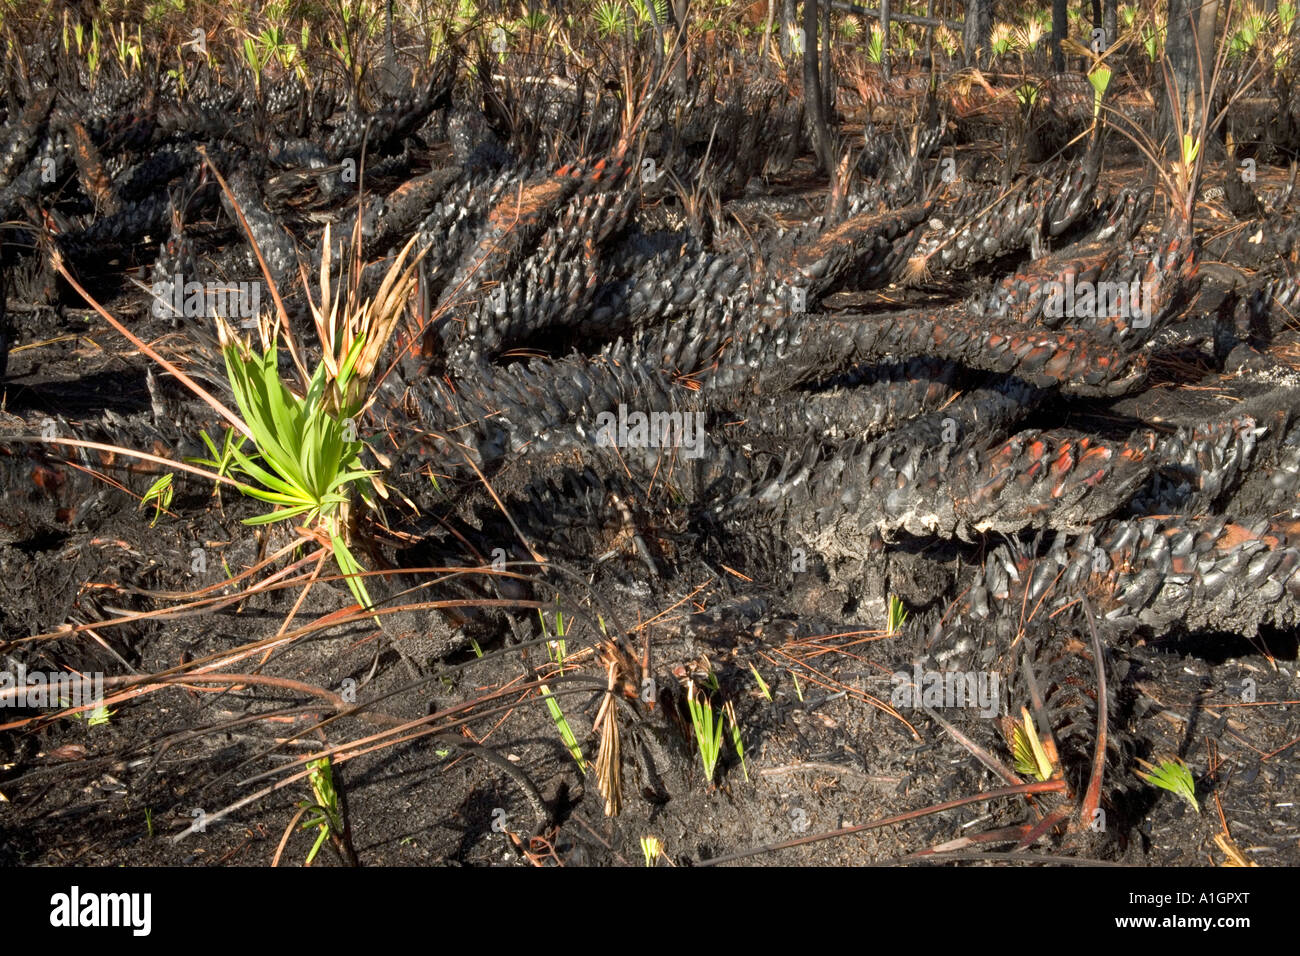 Controlled burn, Saw Palmetto emerging, Florida Stock Photo - Alamy